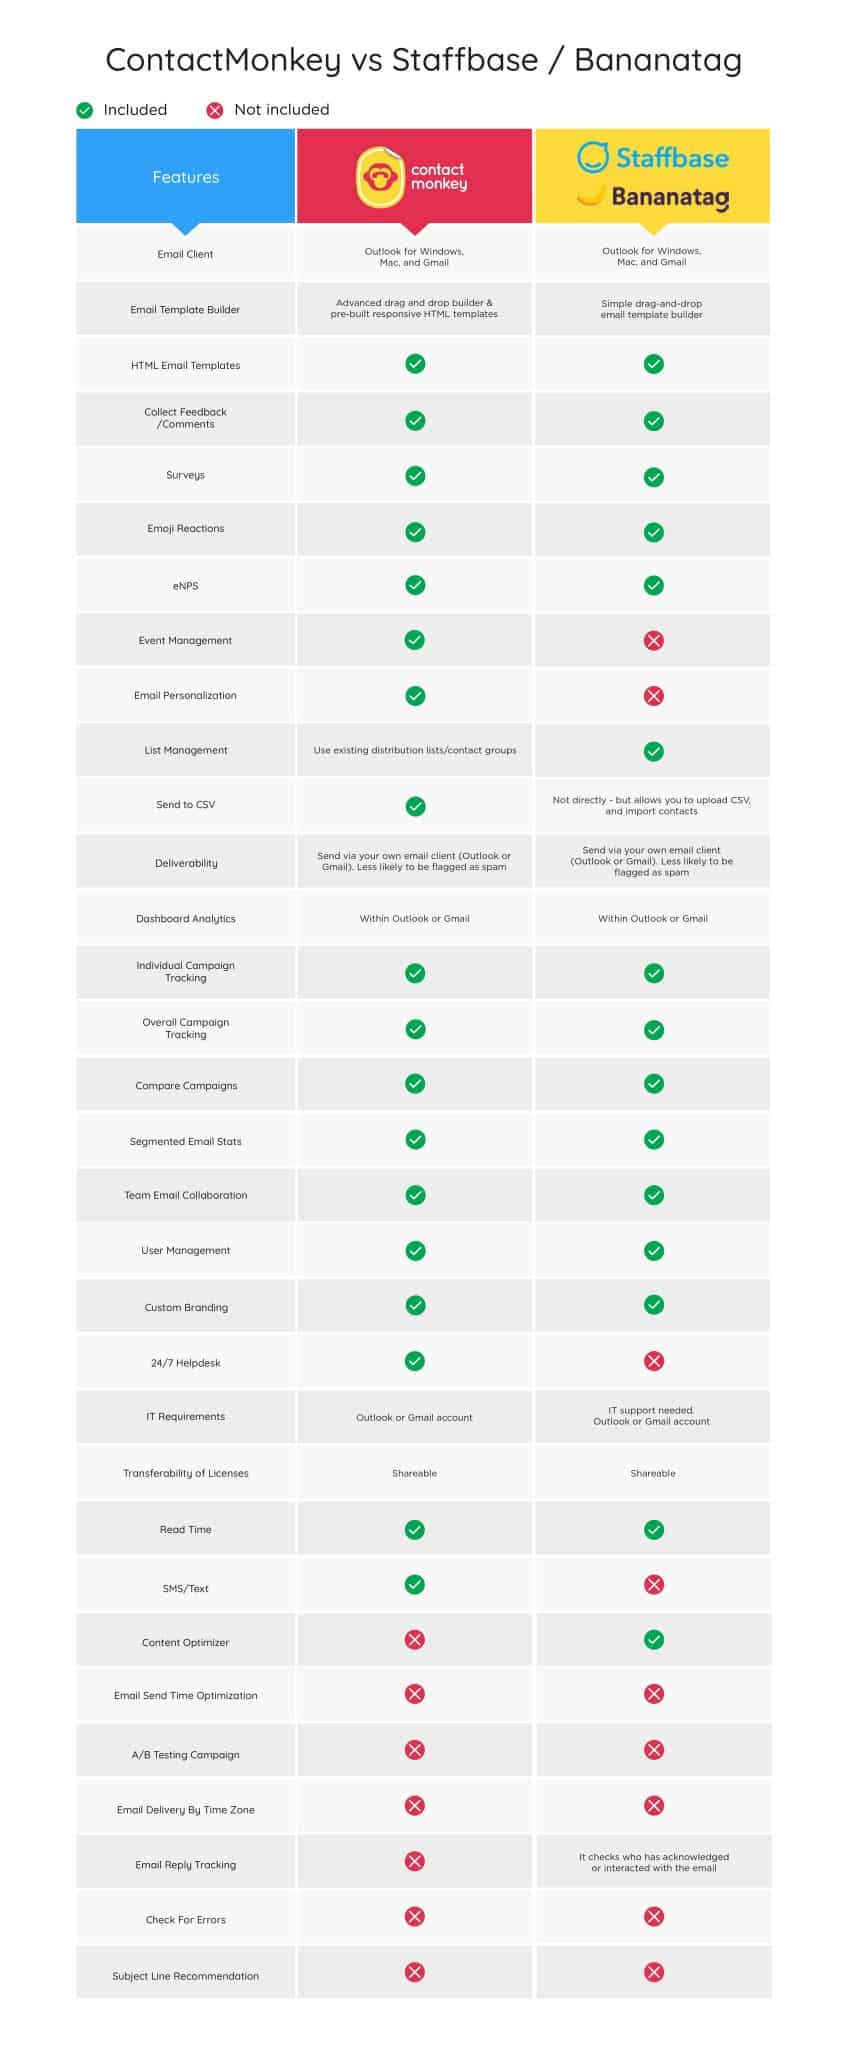 Image of ContactMonkey vs Staffbase comparison chart for internal communication.